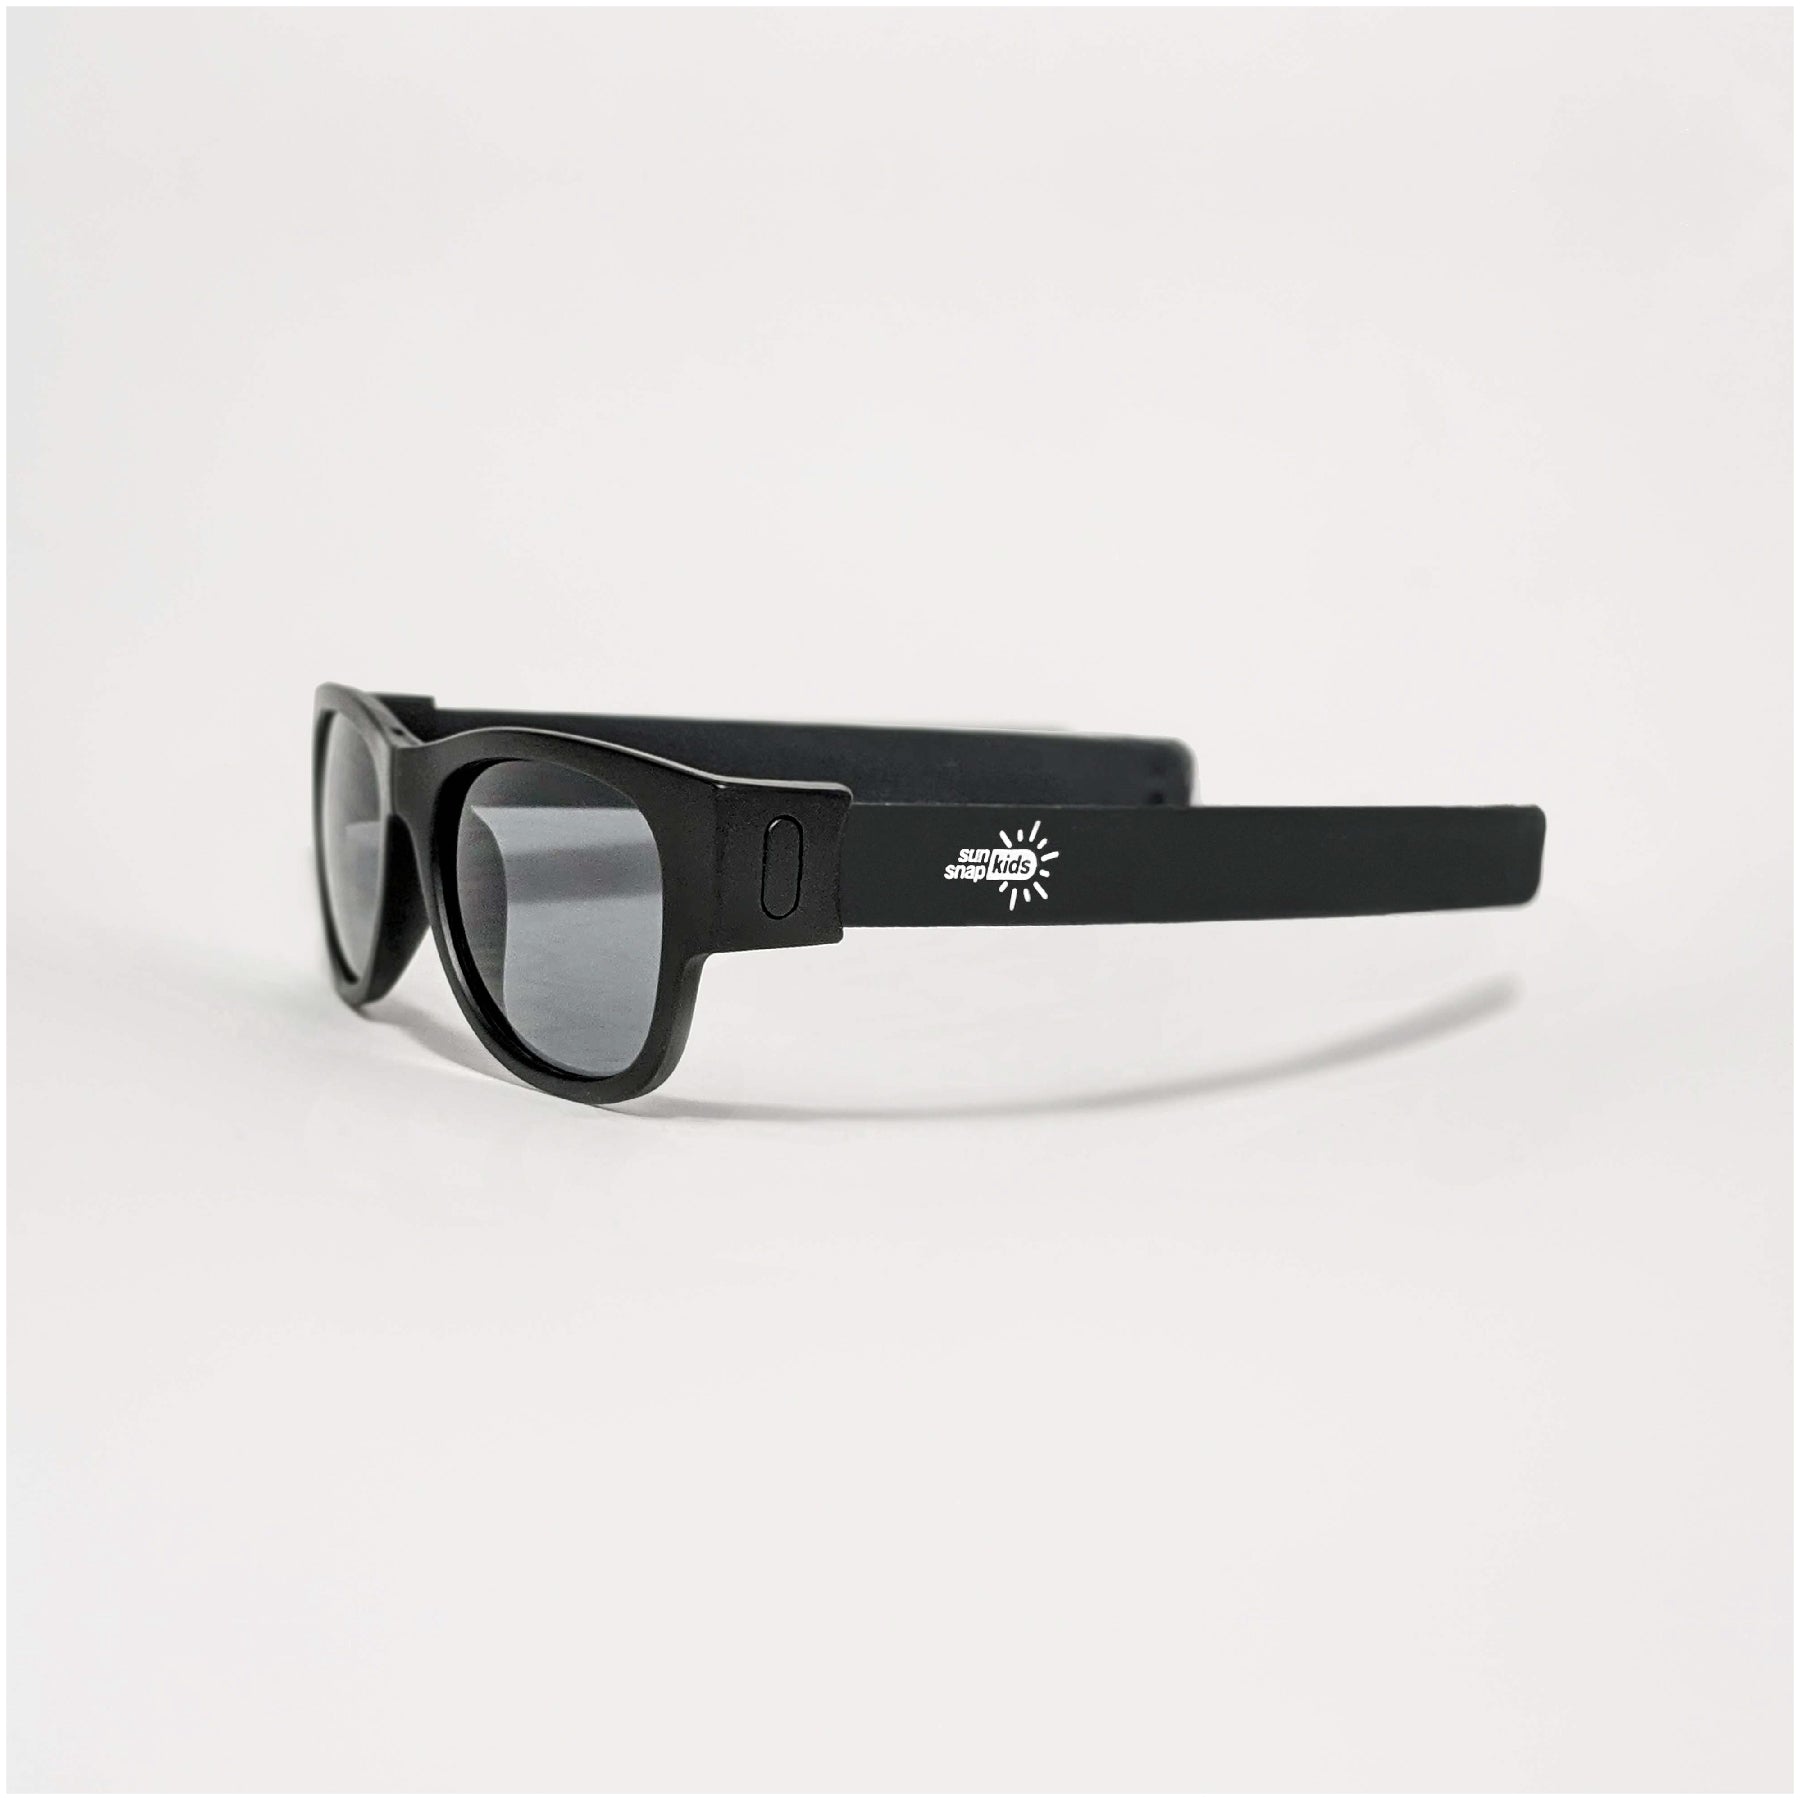 Black Snappable Sunglasses: Original